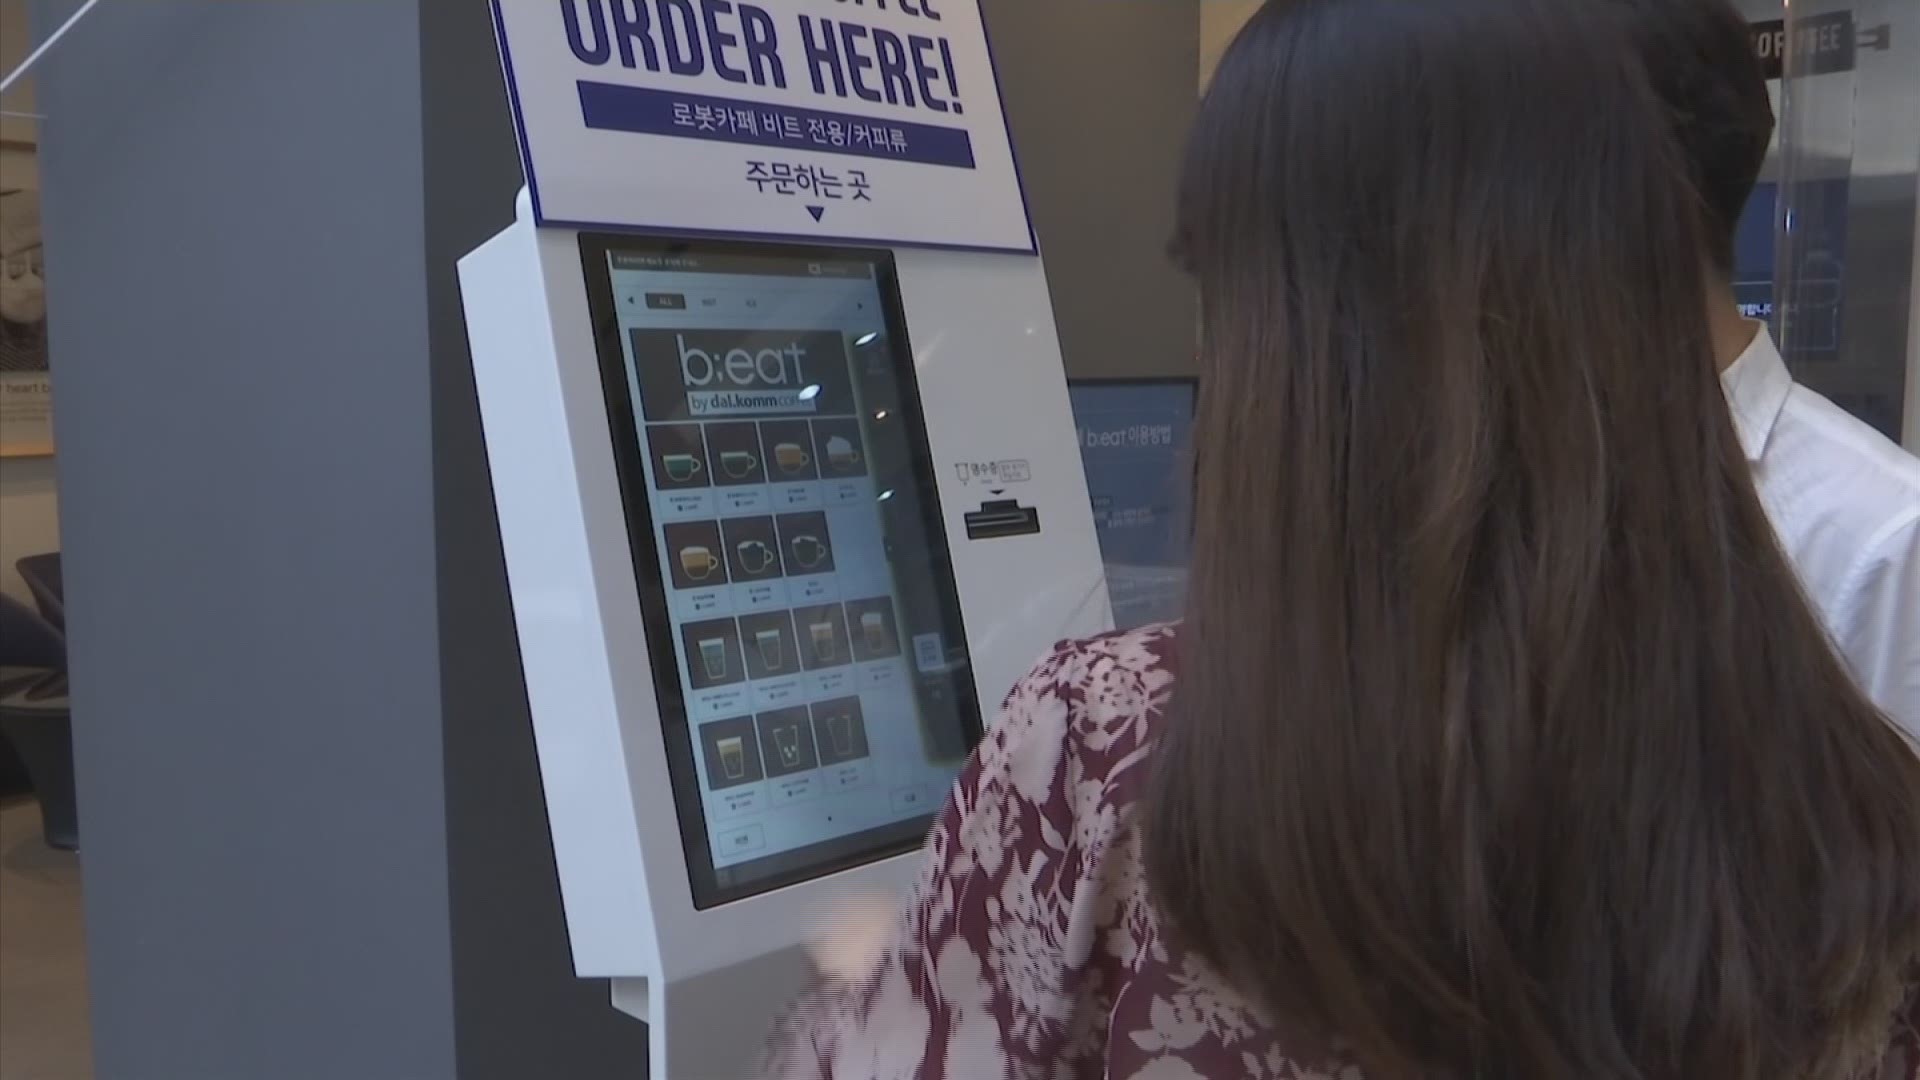 Coffee shops run by robots, rather than human baristas, are emerging across South Korea. (AP)